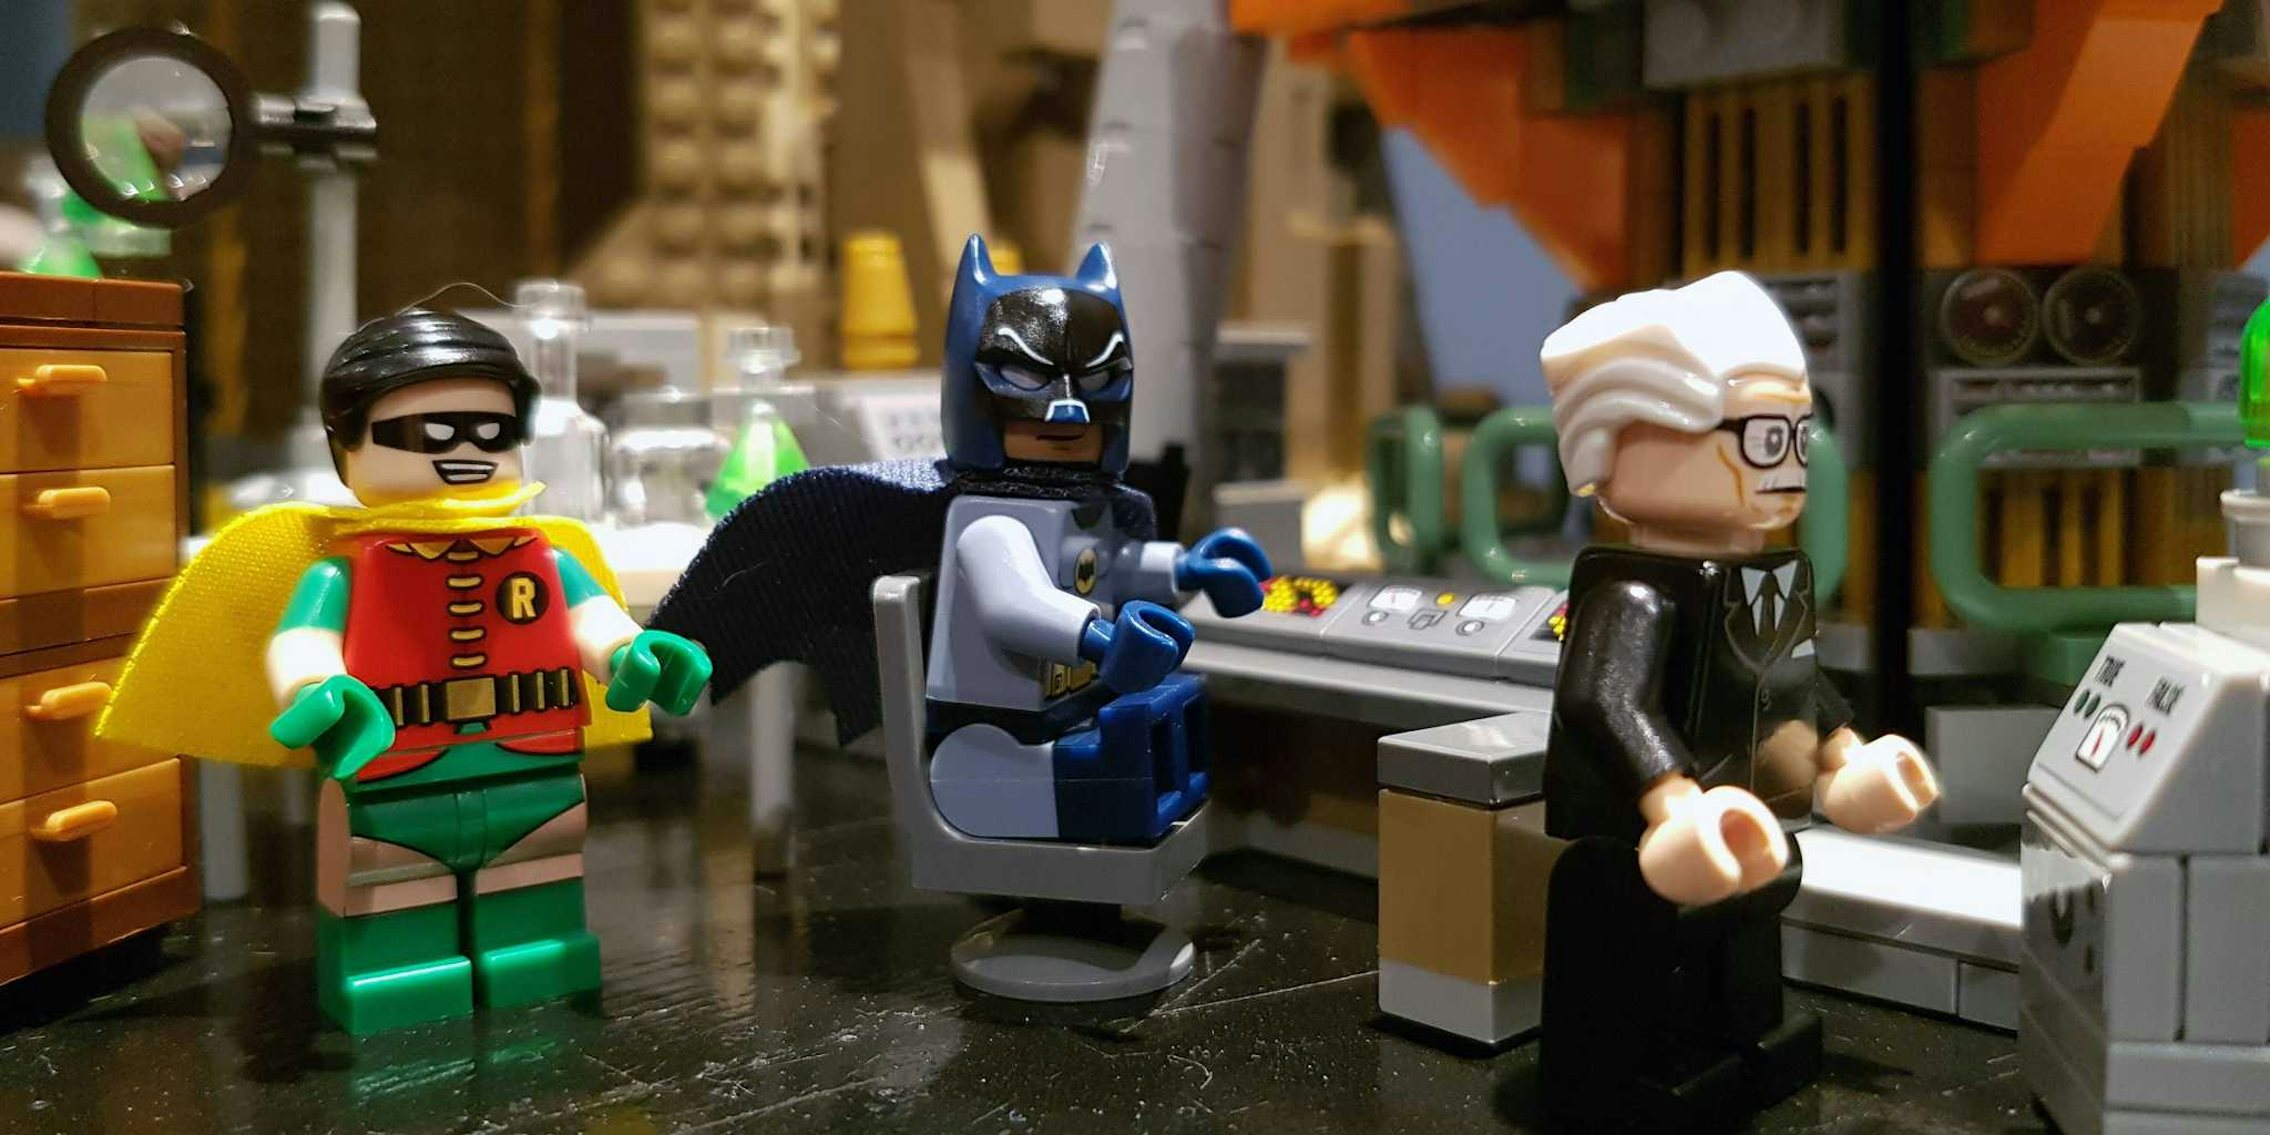 Batman & Alfred Show Robin The Batcave, The Lego Batman Movie